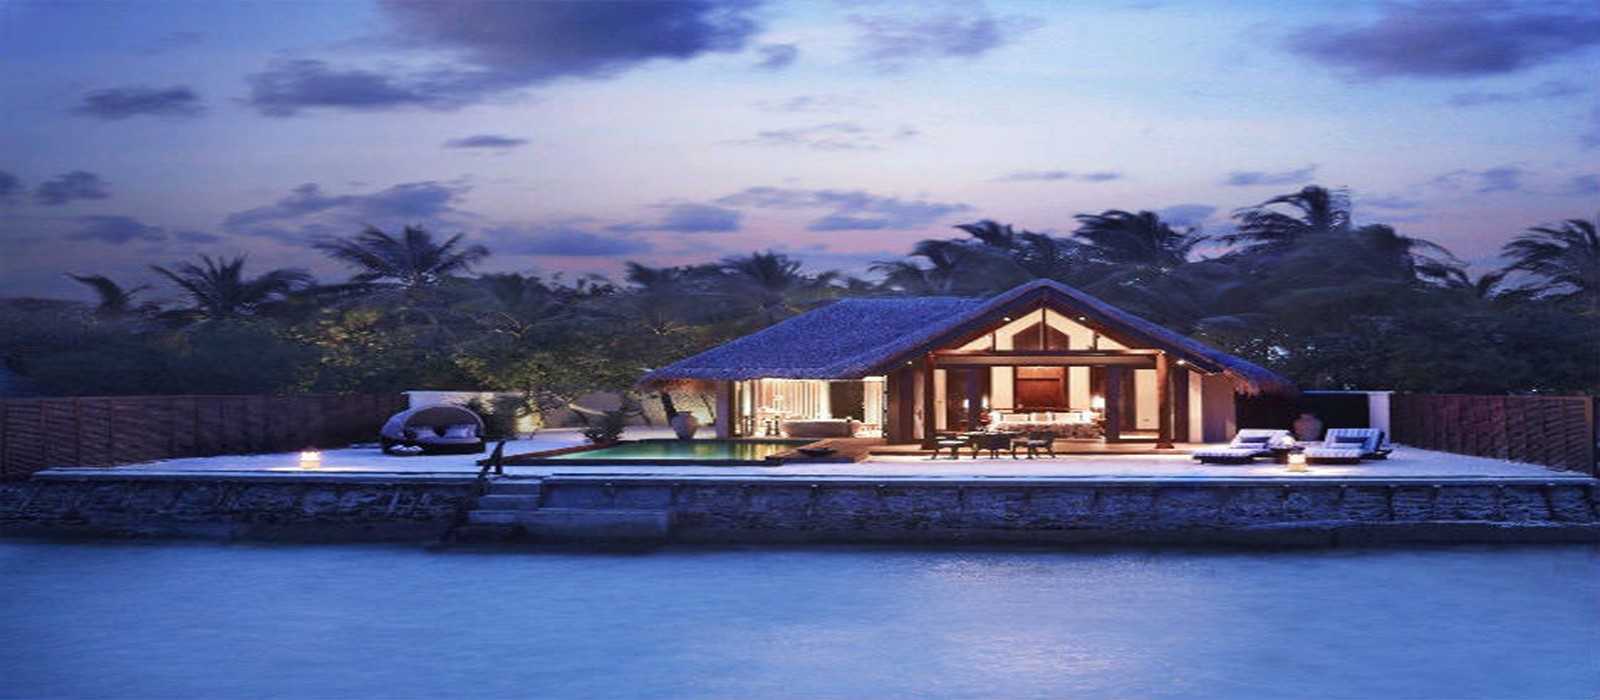 taj exotica - maldives luxury holiday packages - header